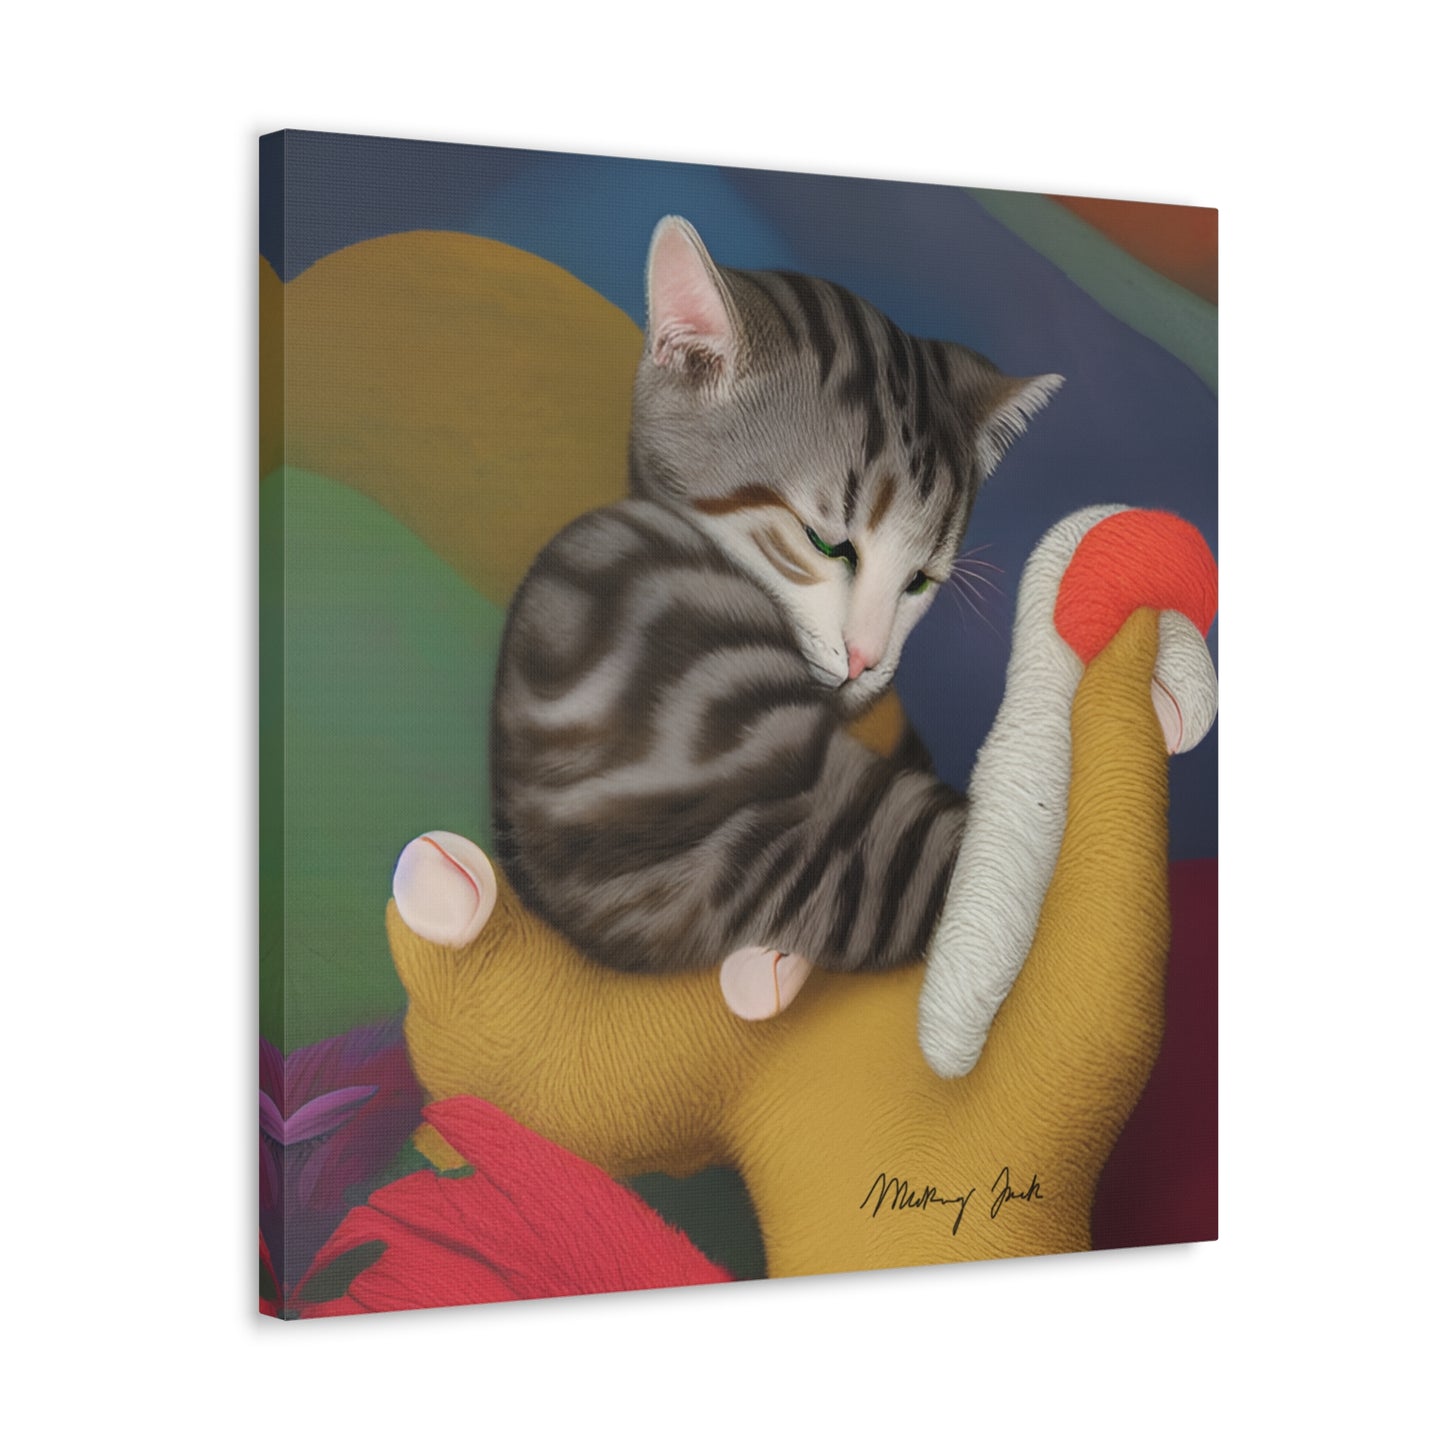 Sleeping Cat Canvas Gallery Wraps